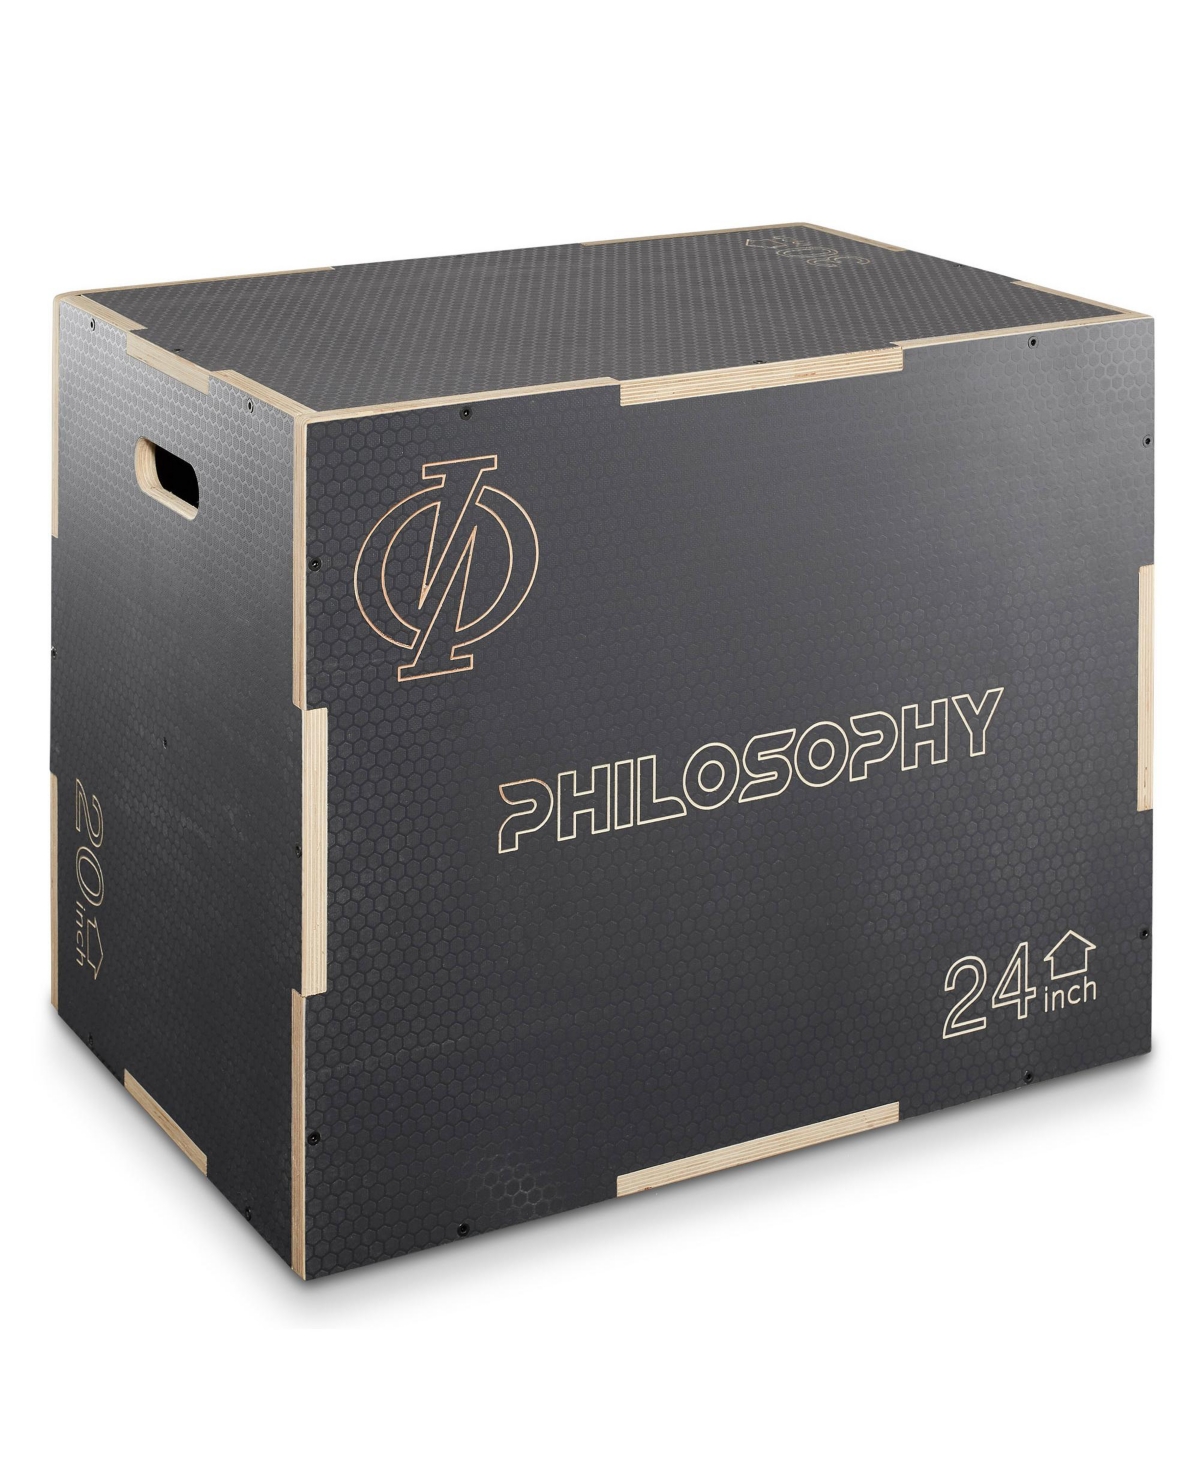 3 in 1 Non-Slip Wood Plyo Box, 30" x 24" x 20", Gray, Jump Plyometric Box for Training and Conditioning - Grey